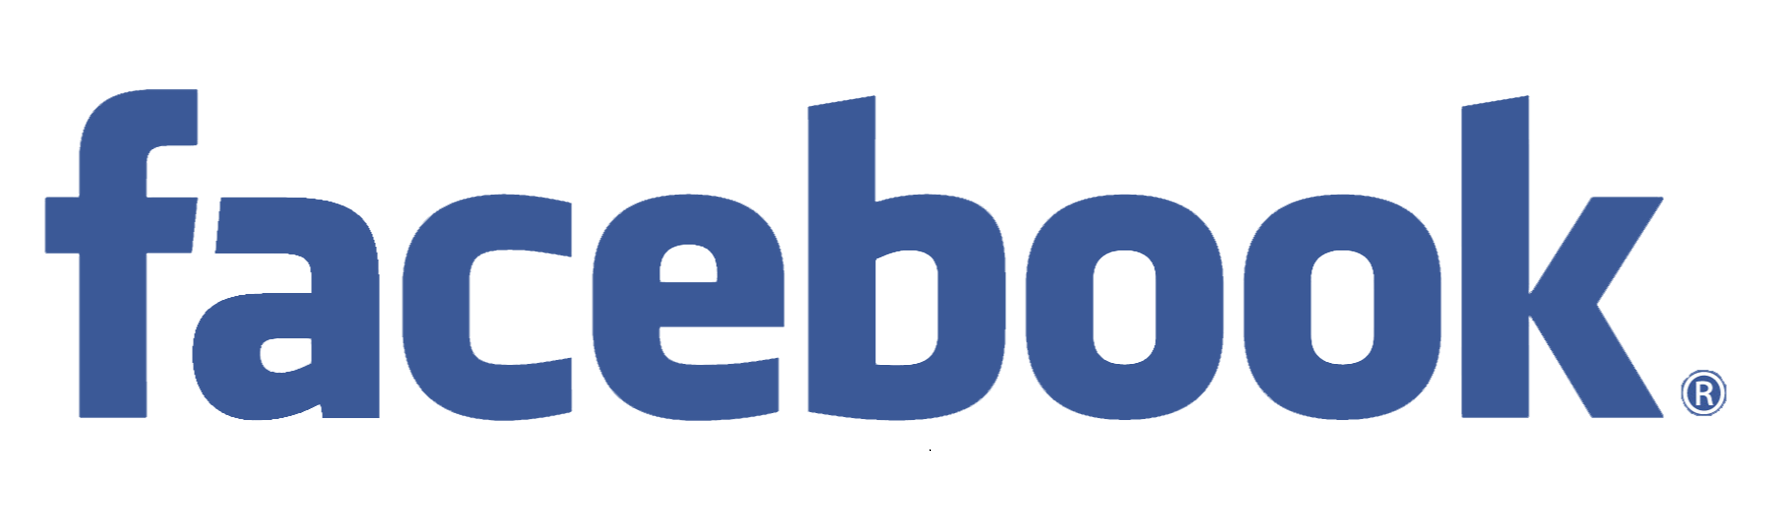 Network Pay-Per-Click Media Facebook Advertising Social Logo PNG Image